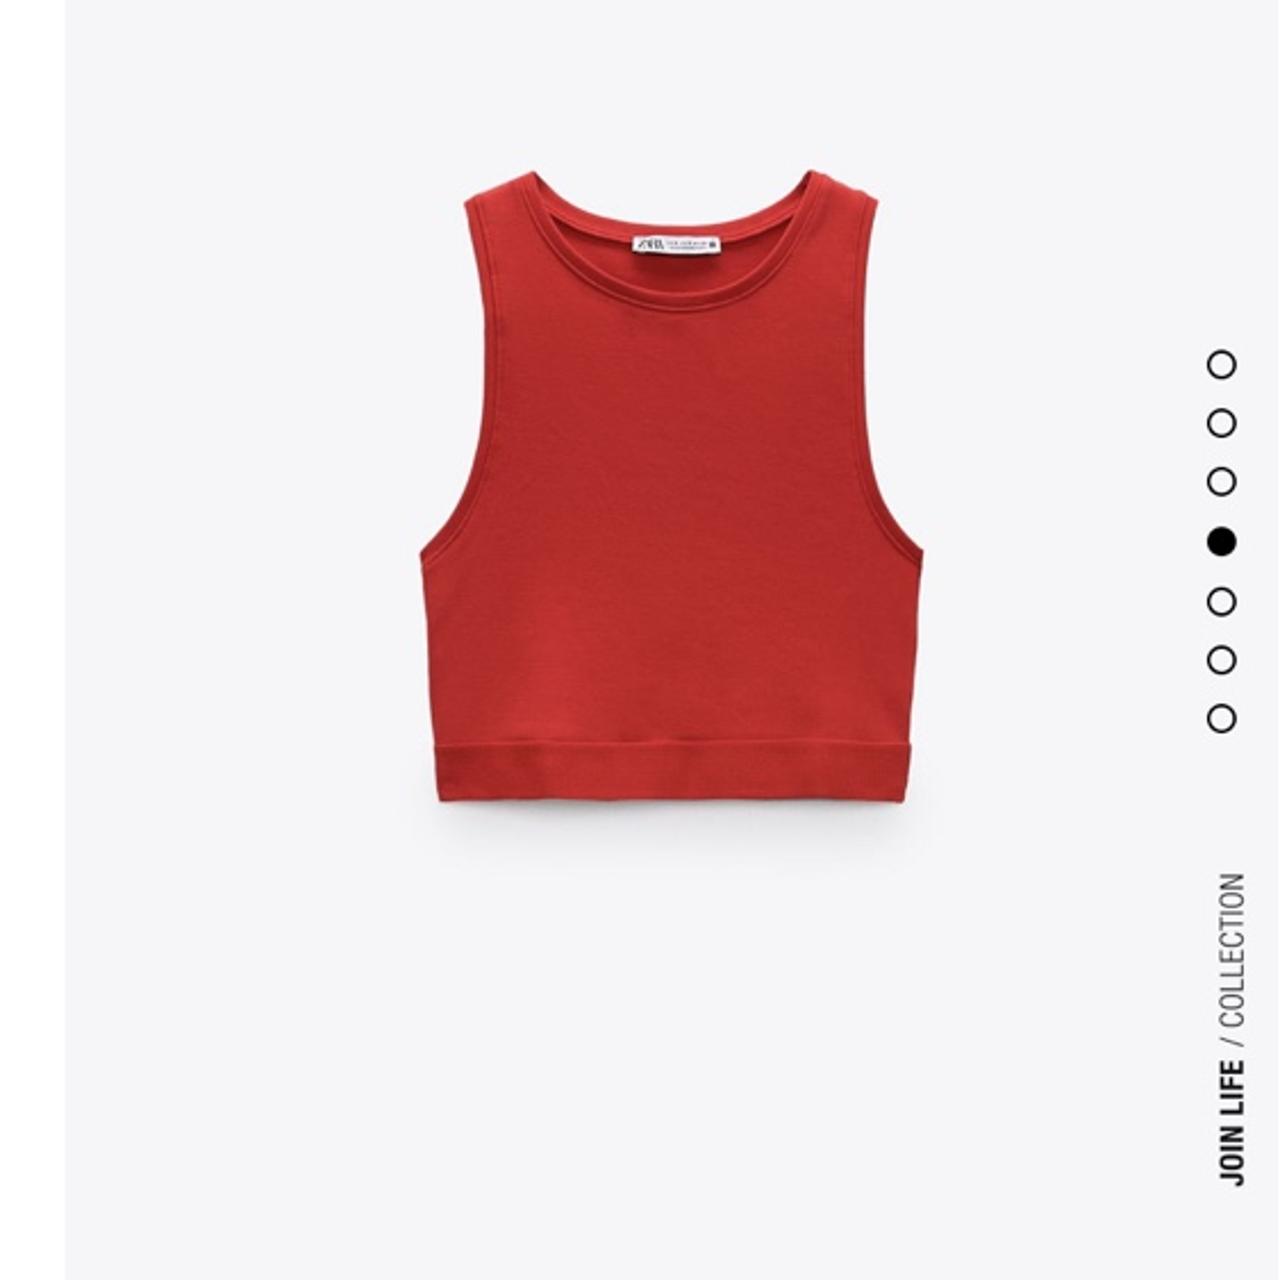 Zara red 'halter crop top'. Size S sold ...